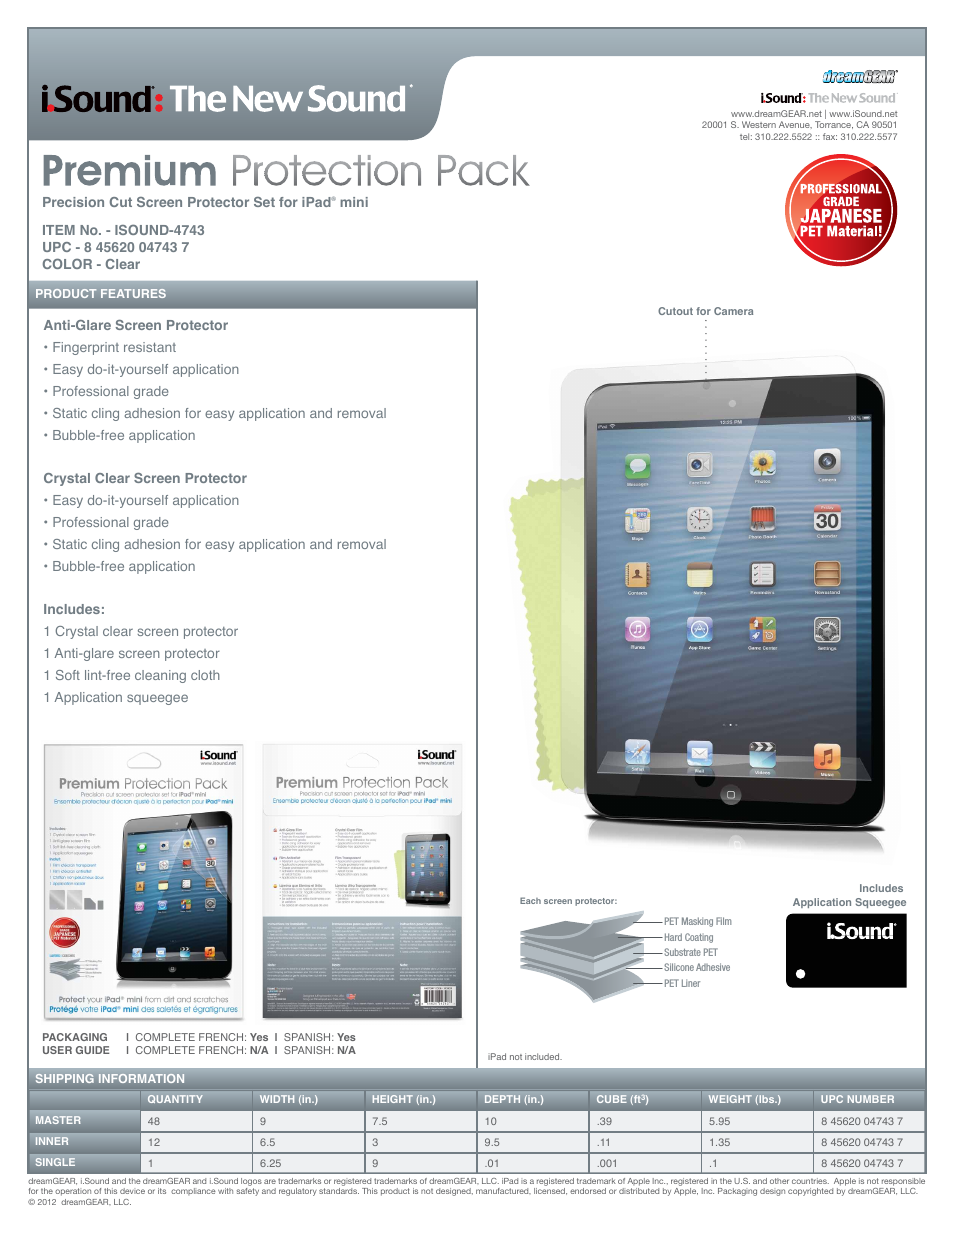 Premium Protection Pack for iPadmini - Sell Sheet